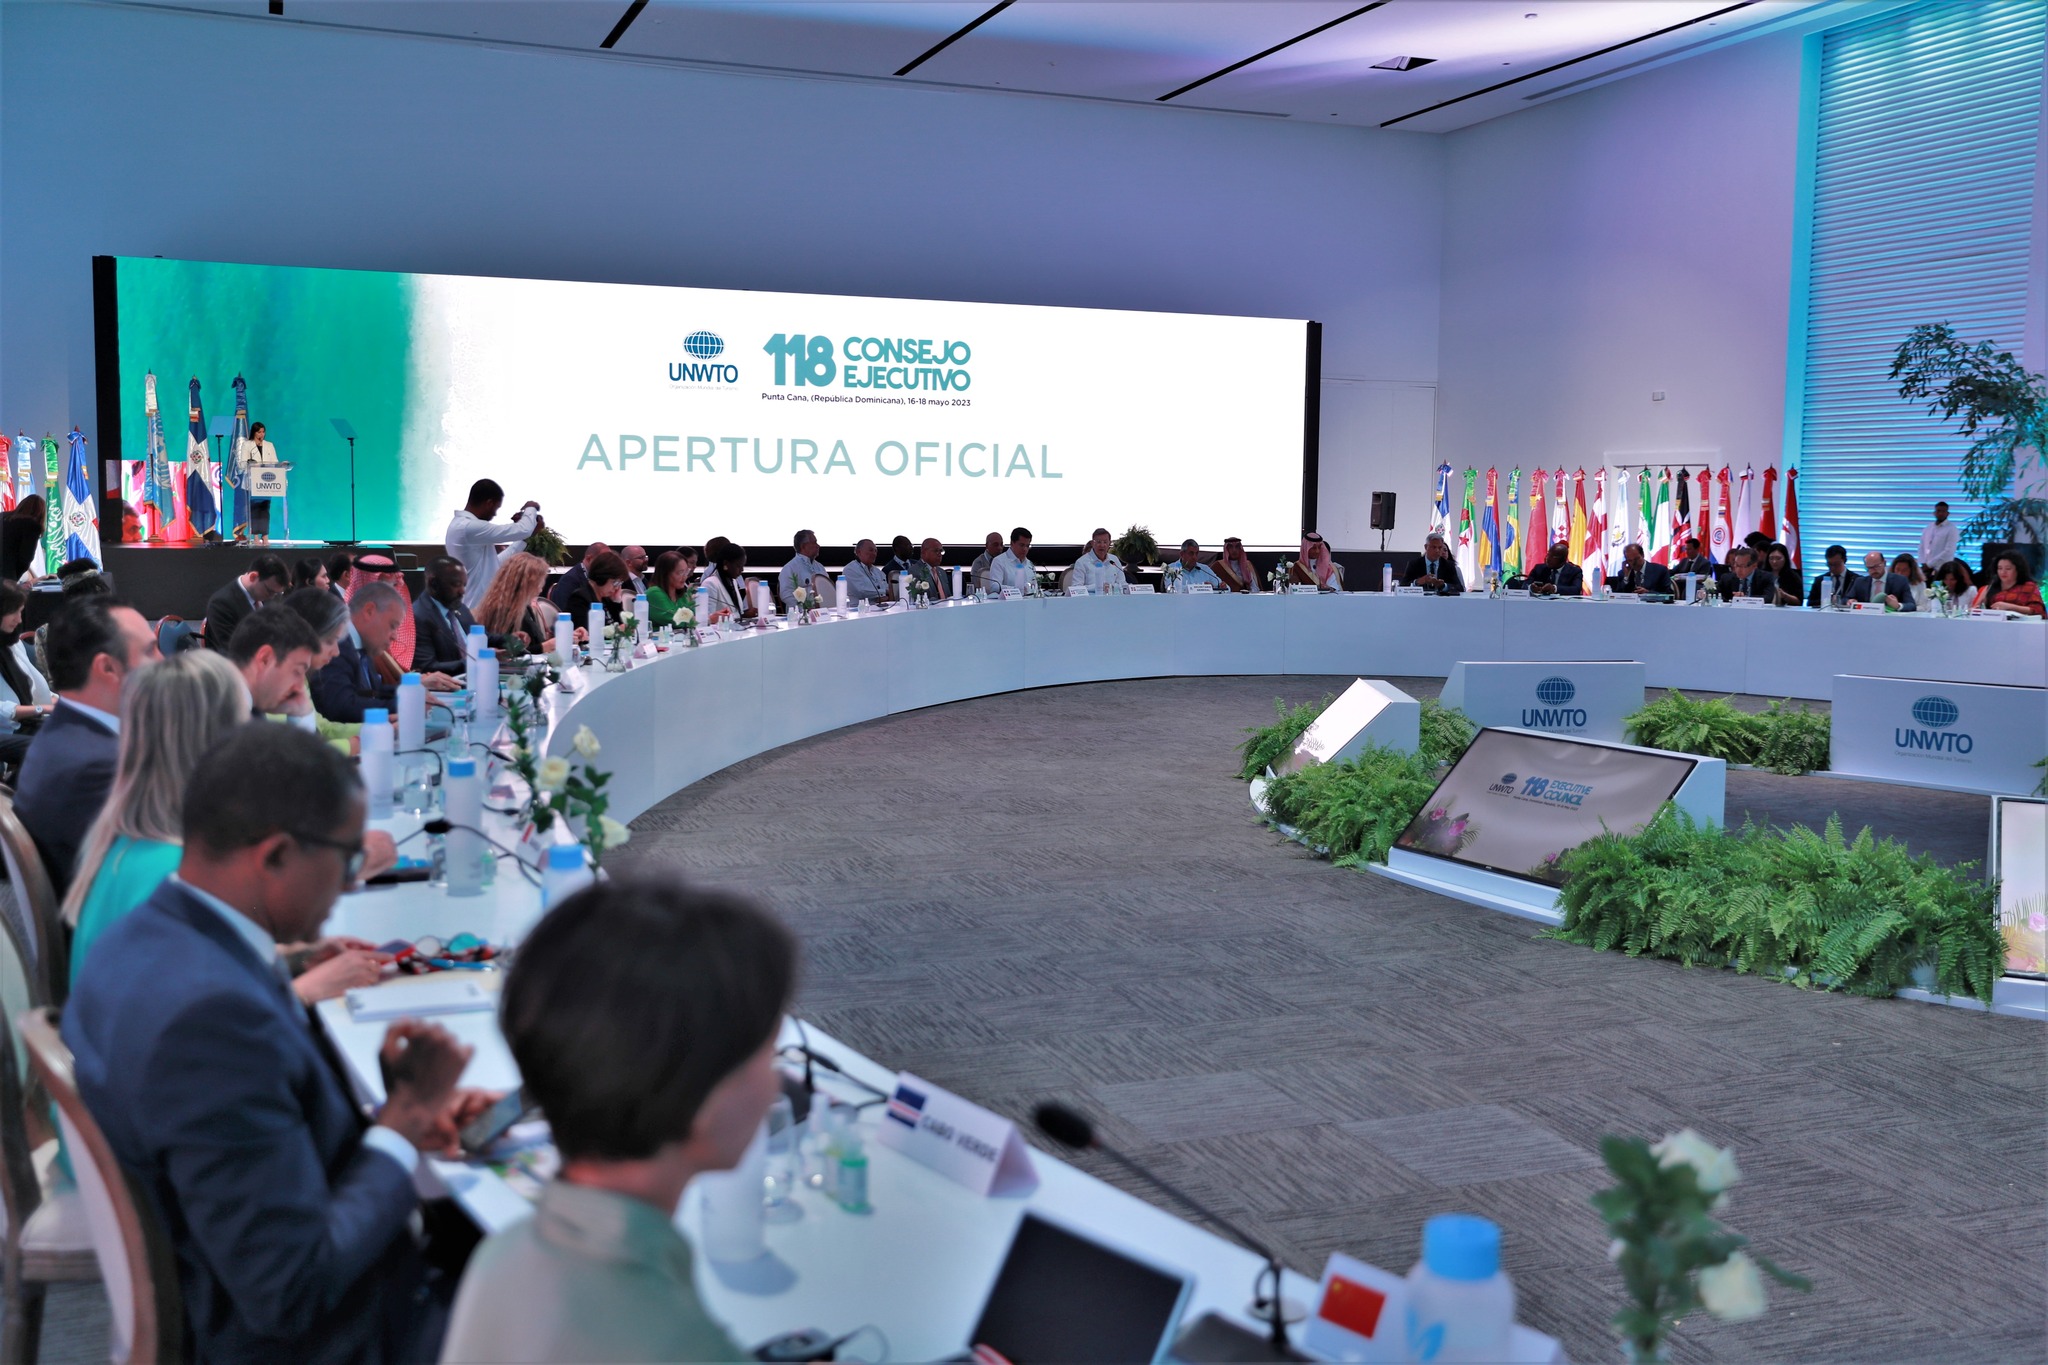 Georgian representatives attend Executive Council meeting of UN World Tourism Organization